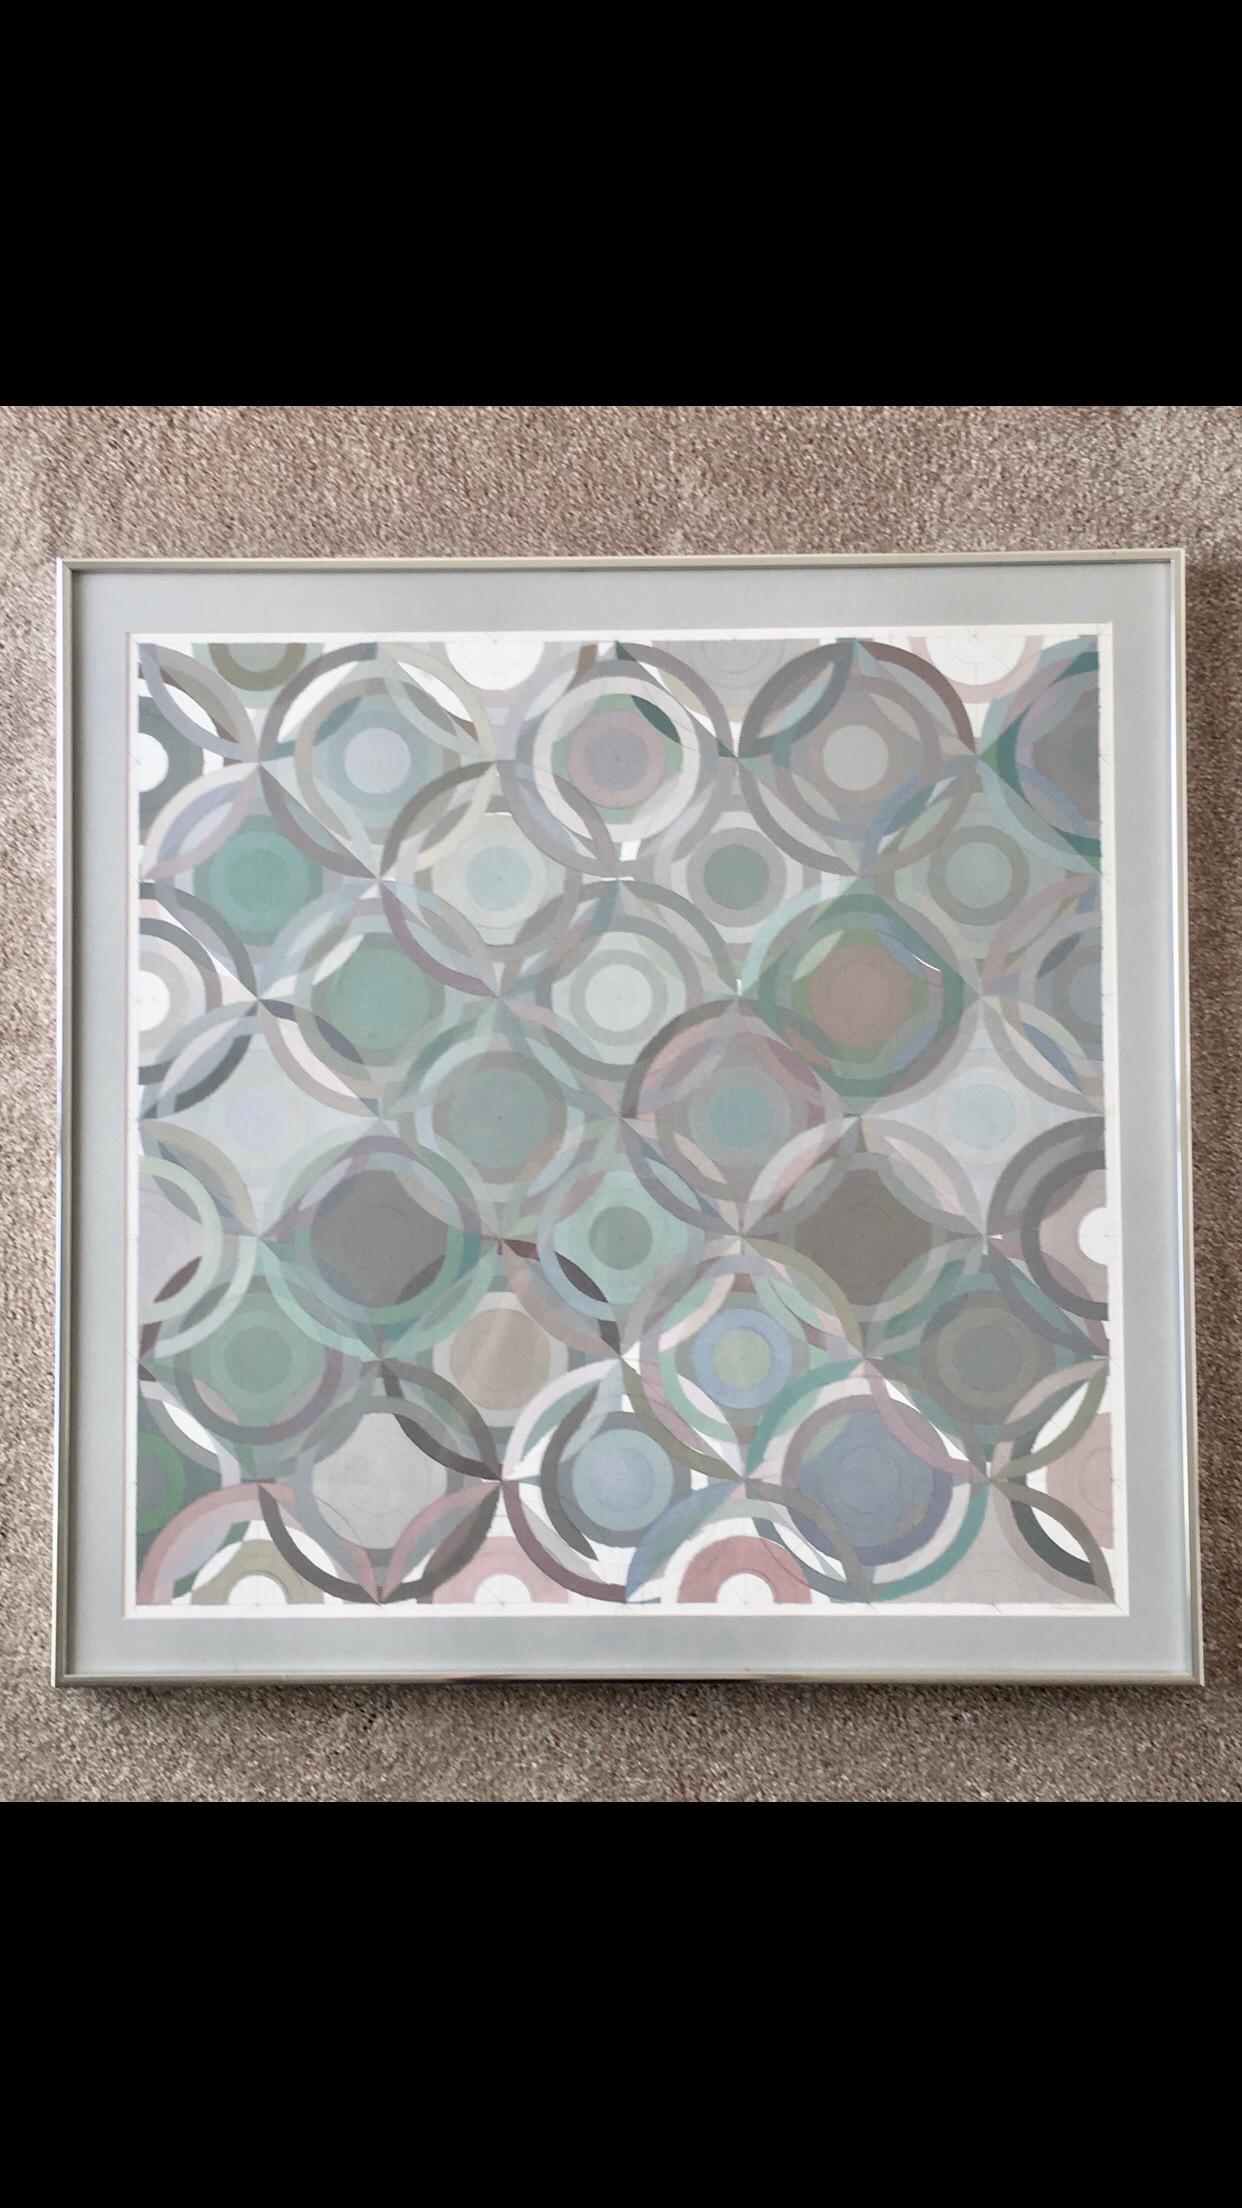 Framed abstract geometric gouache on paper by Stevan Kissel

Signed: Stevan Kissel

Los Angeles, CA.

Beautifully framed.